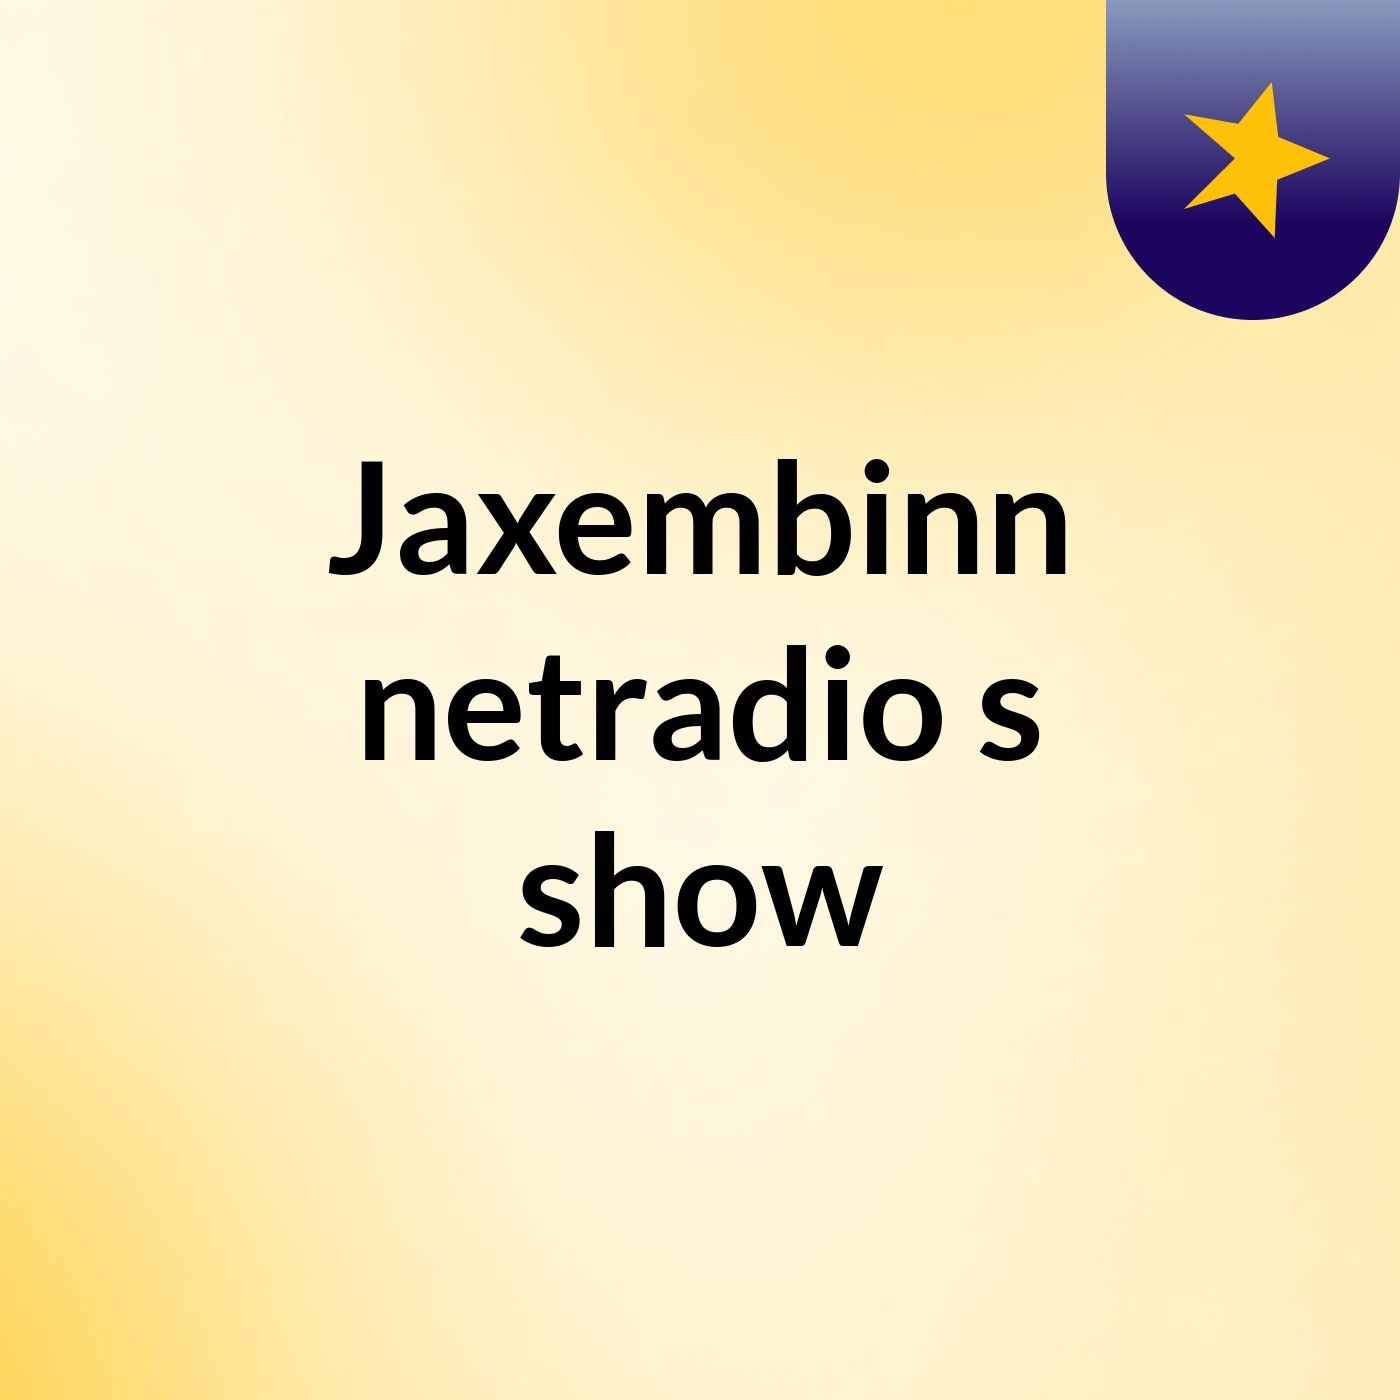 Jaxembinn netradio's show